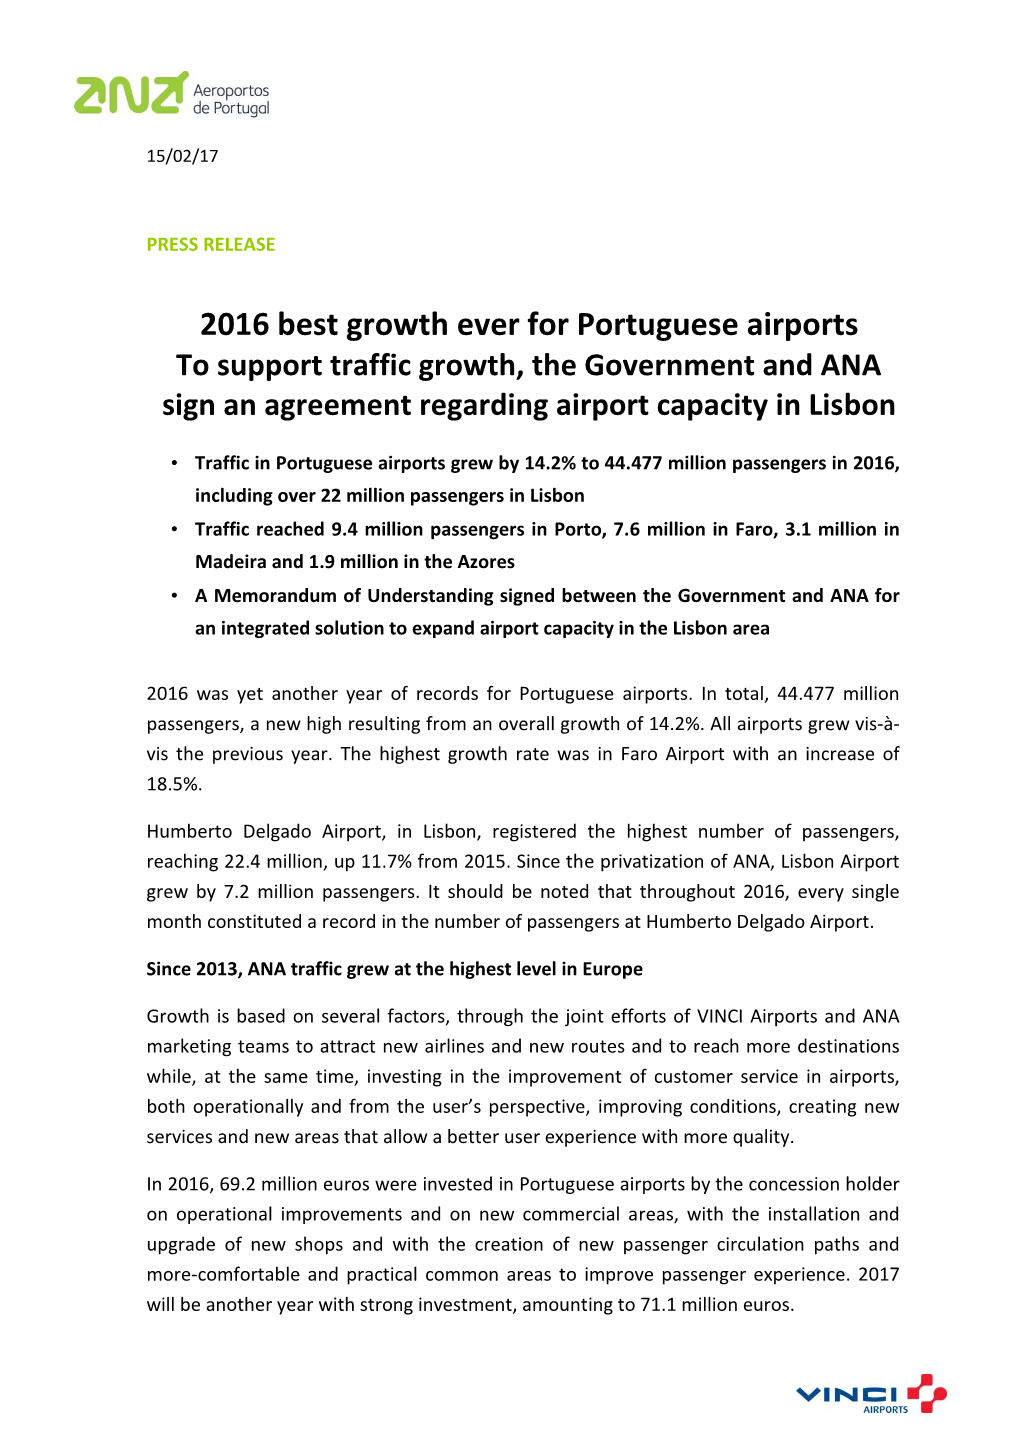 PR Lisbon Airport Capacity Agreement 20170215